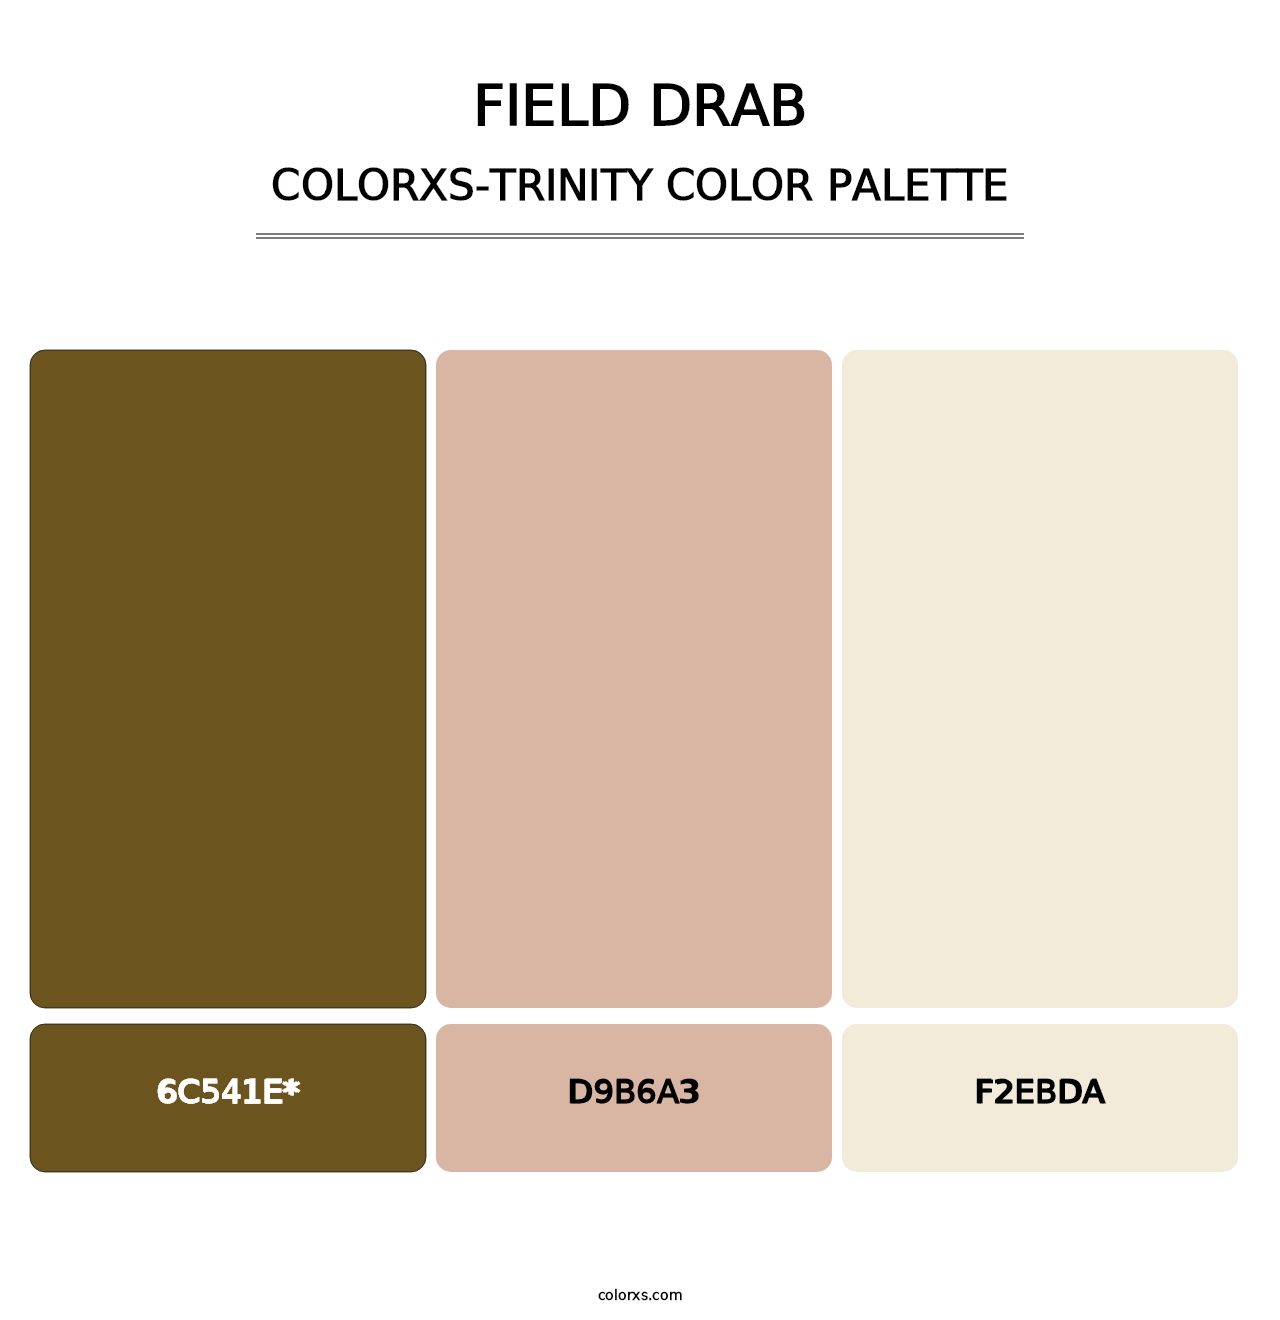 Field Drab - Colorxs Trinity Palette